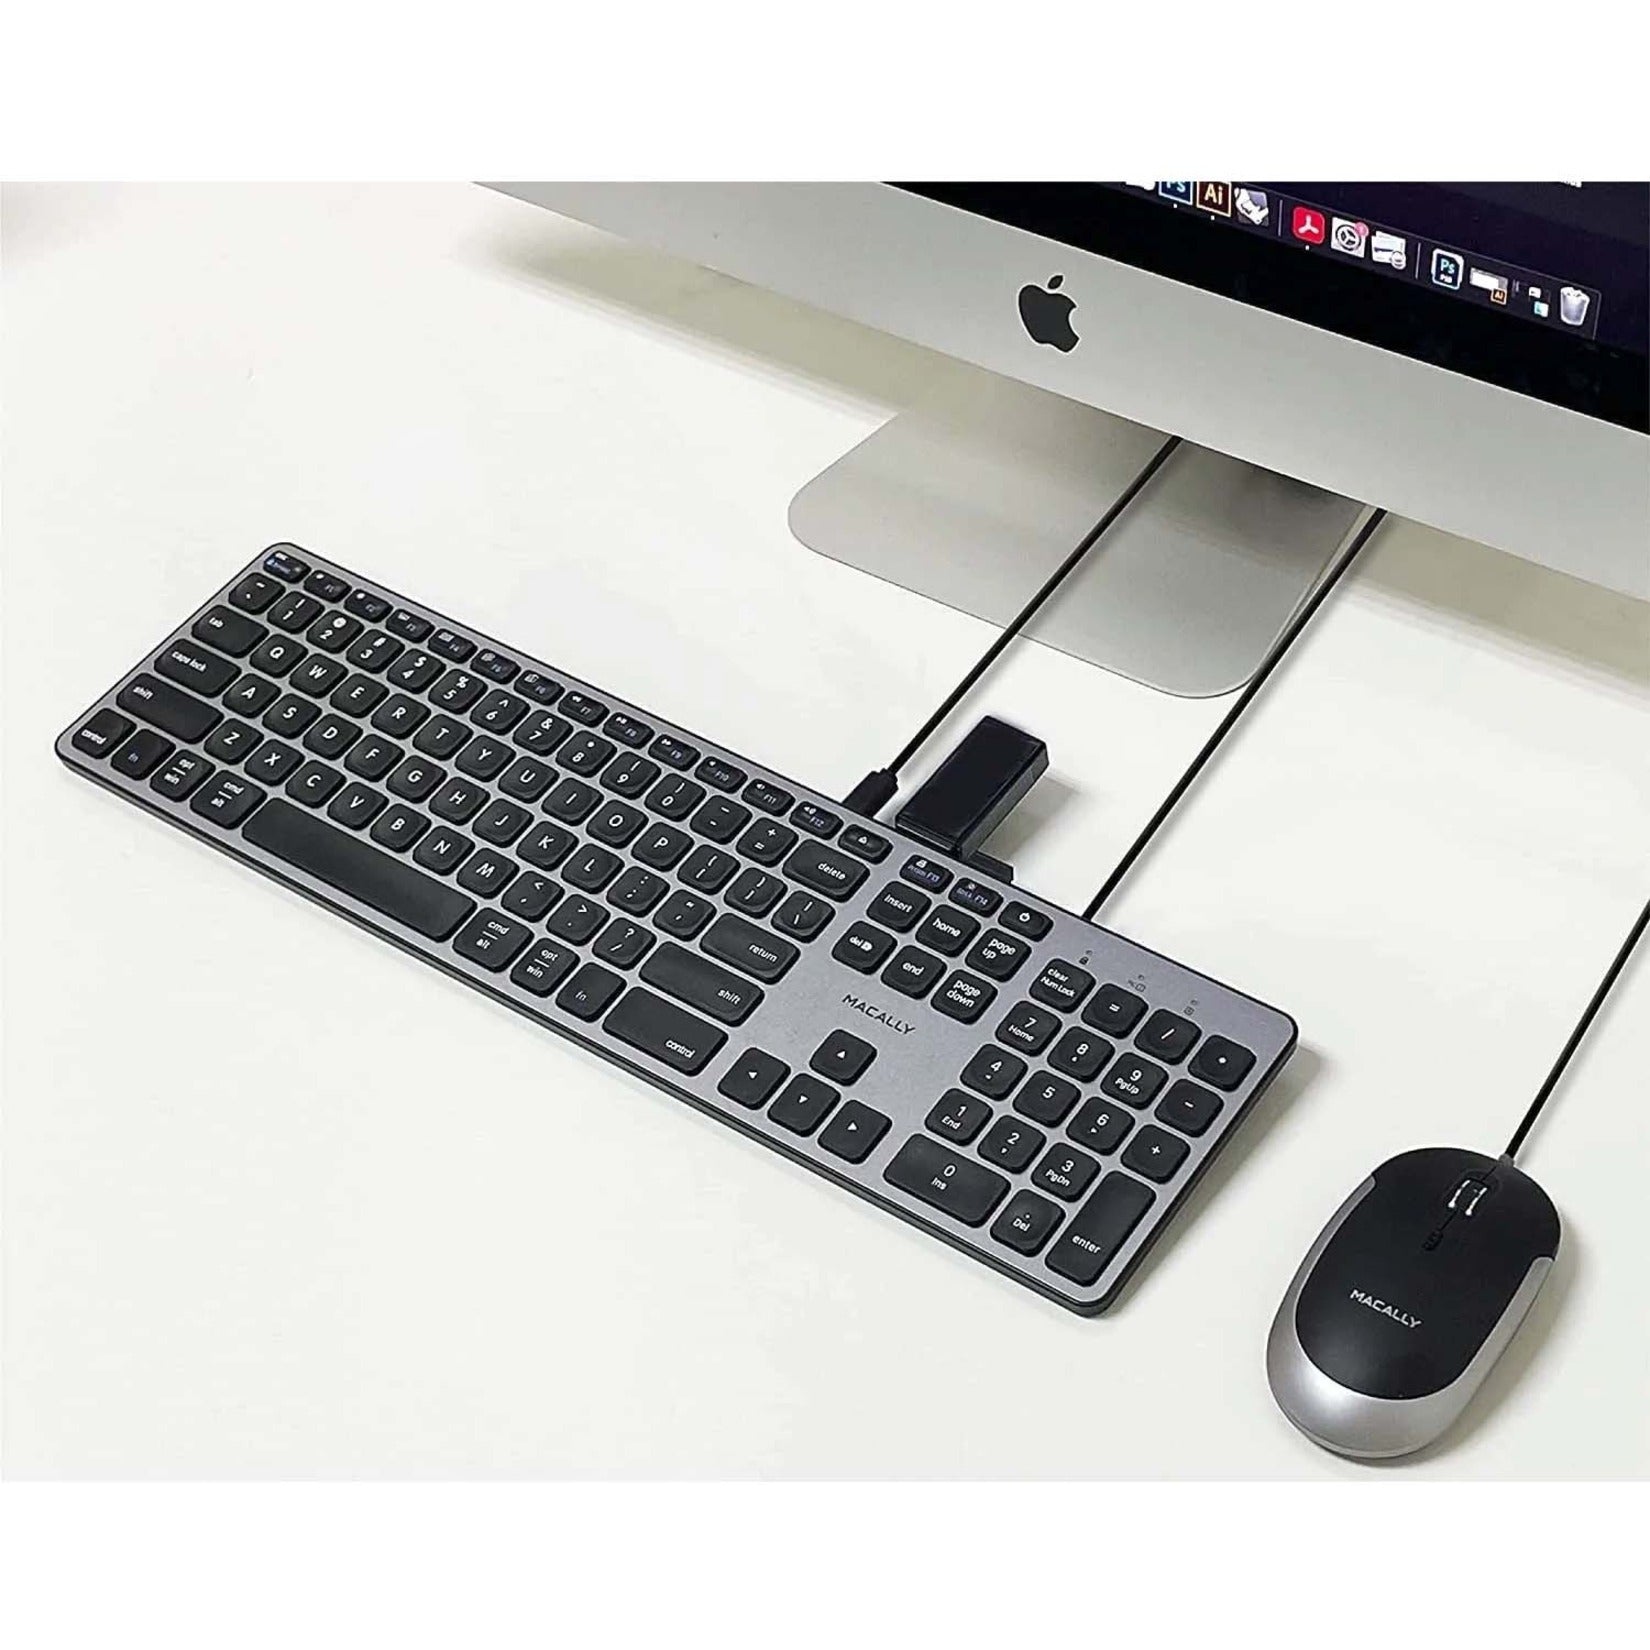 Macally UCZKEYHUBACSG Keyboard, Full-size Keyboard with Low-profile Keys, LED Indicator, and Slim Design